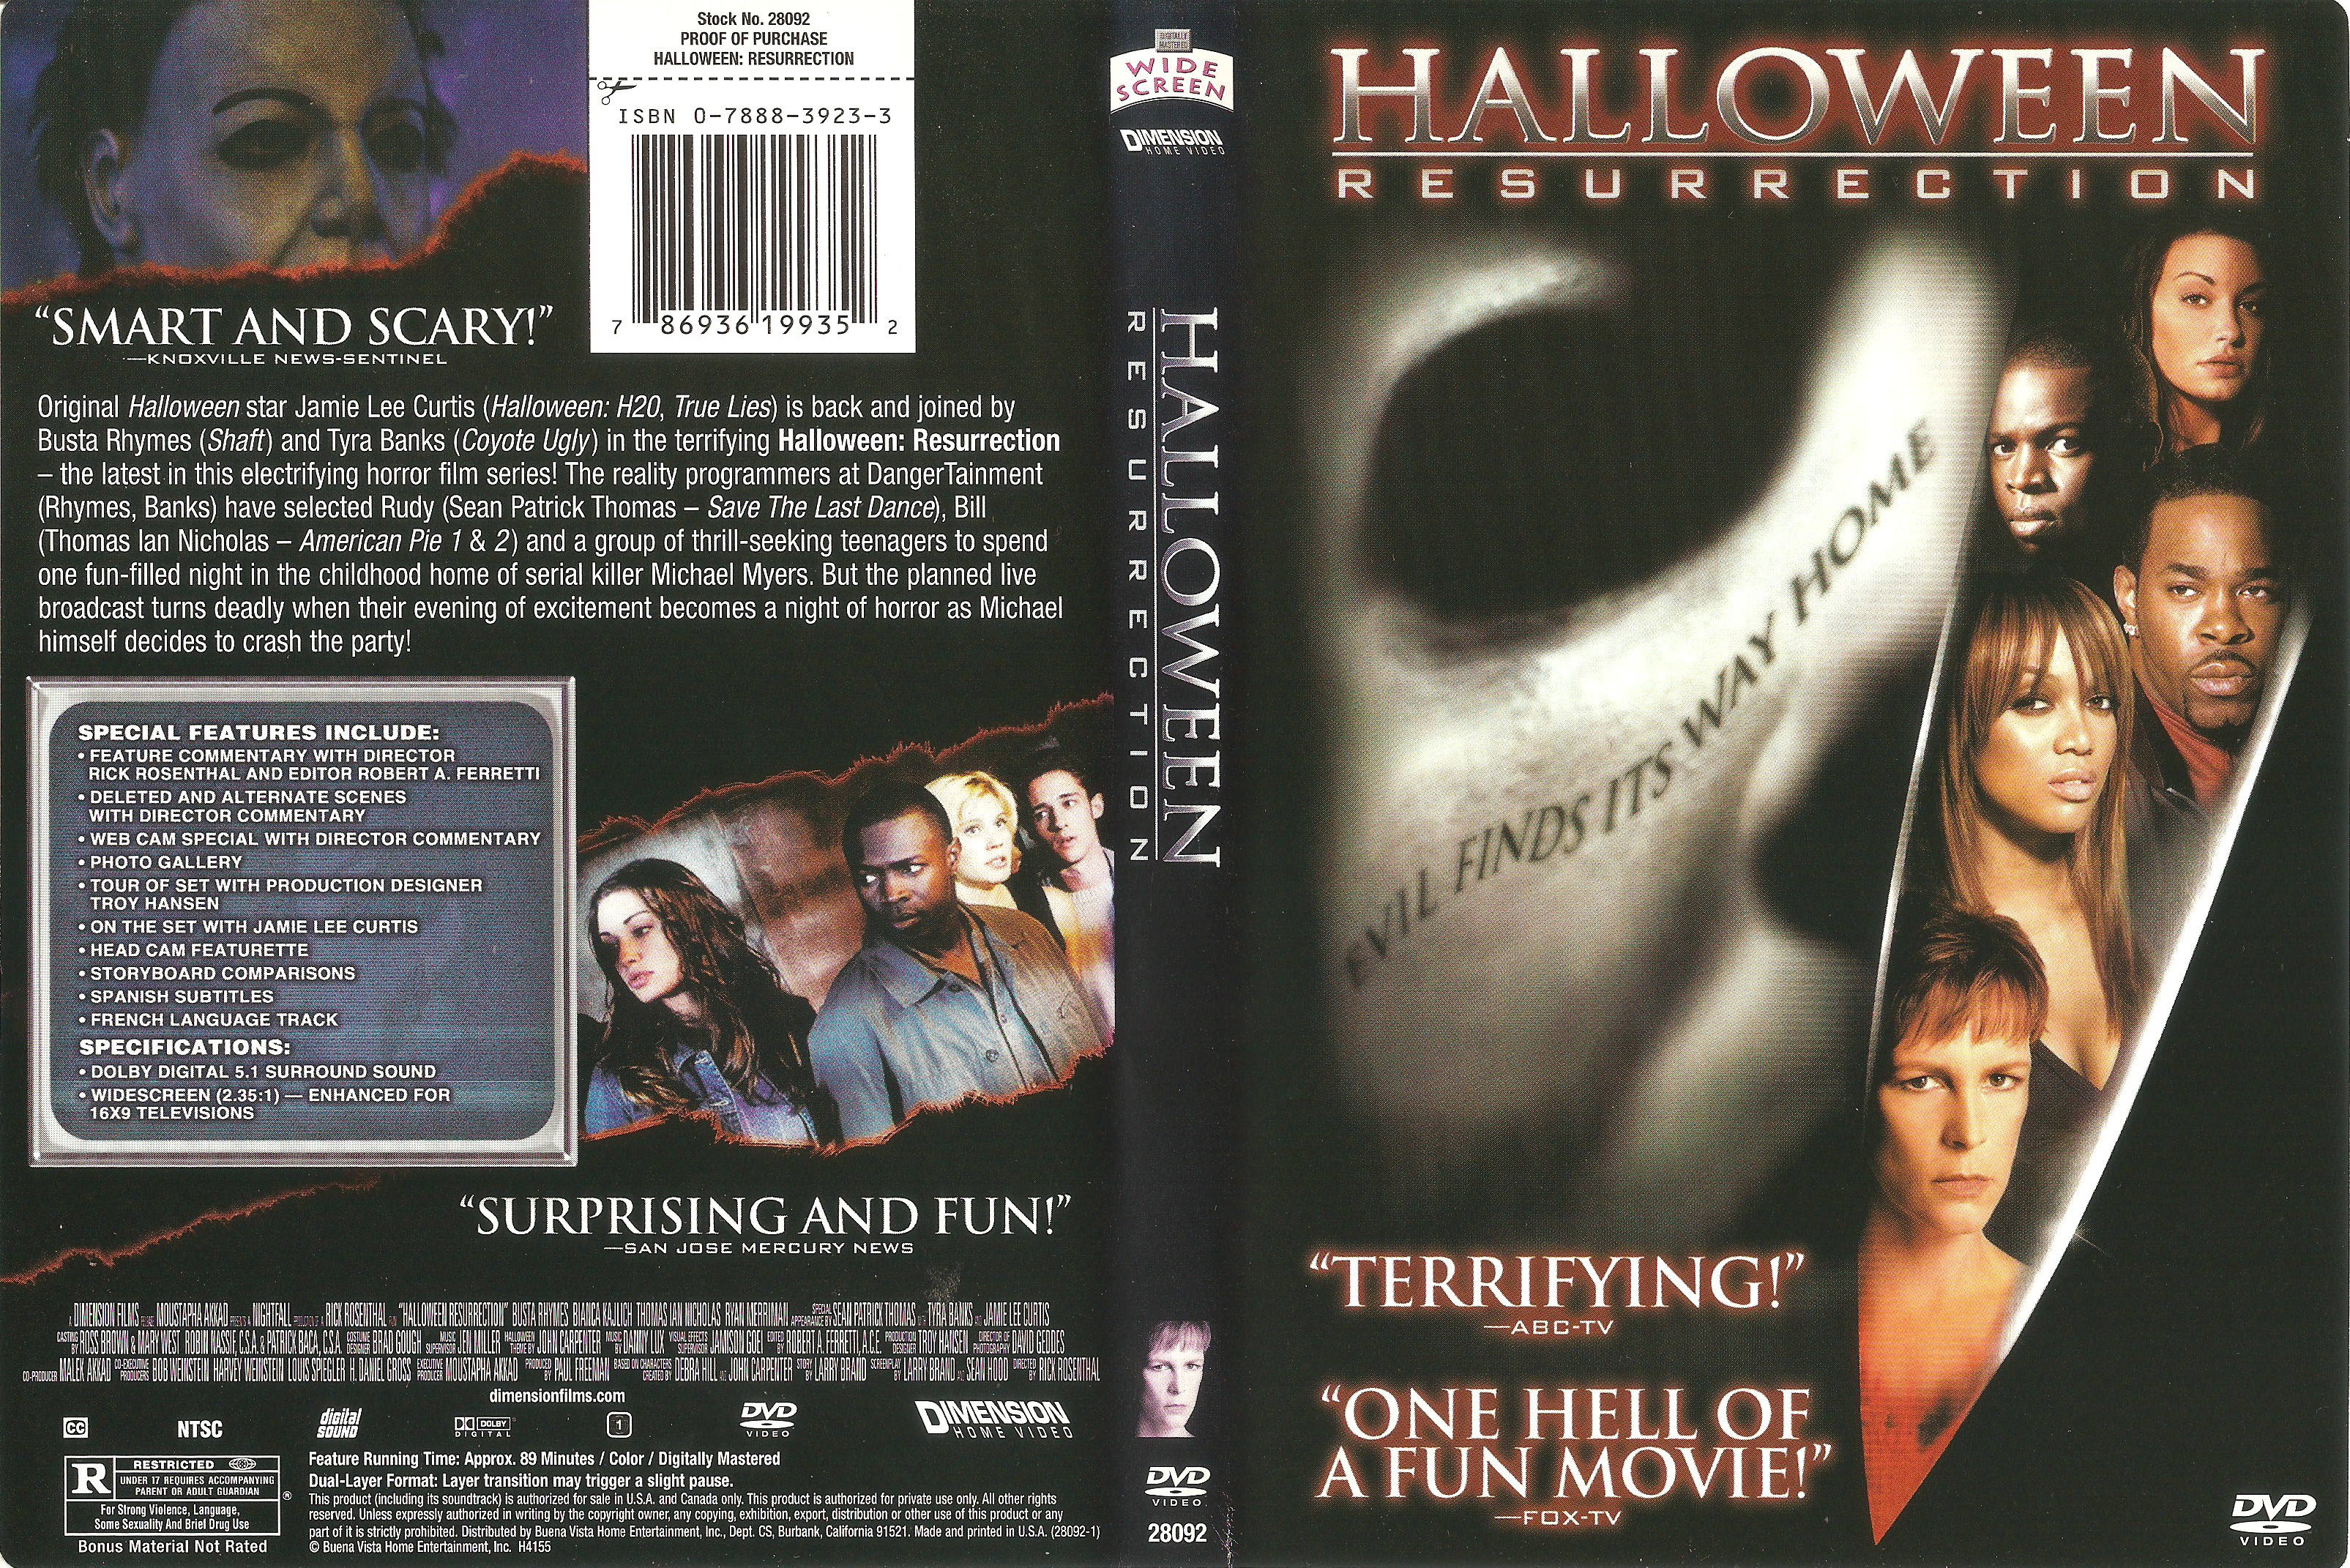 Jaquette DVD Halloween resurrection (Canadienne)